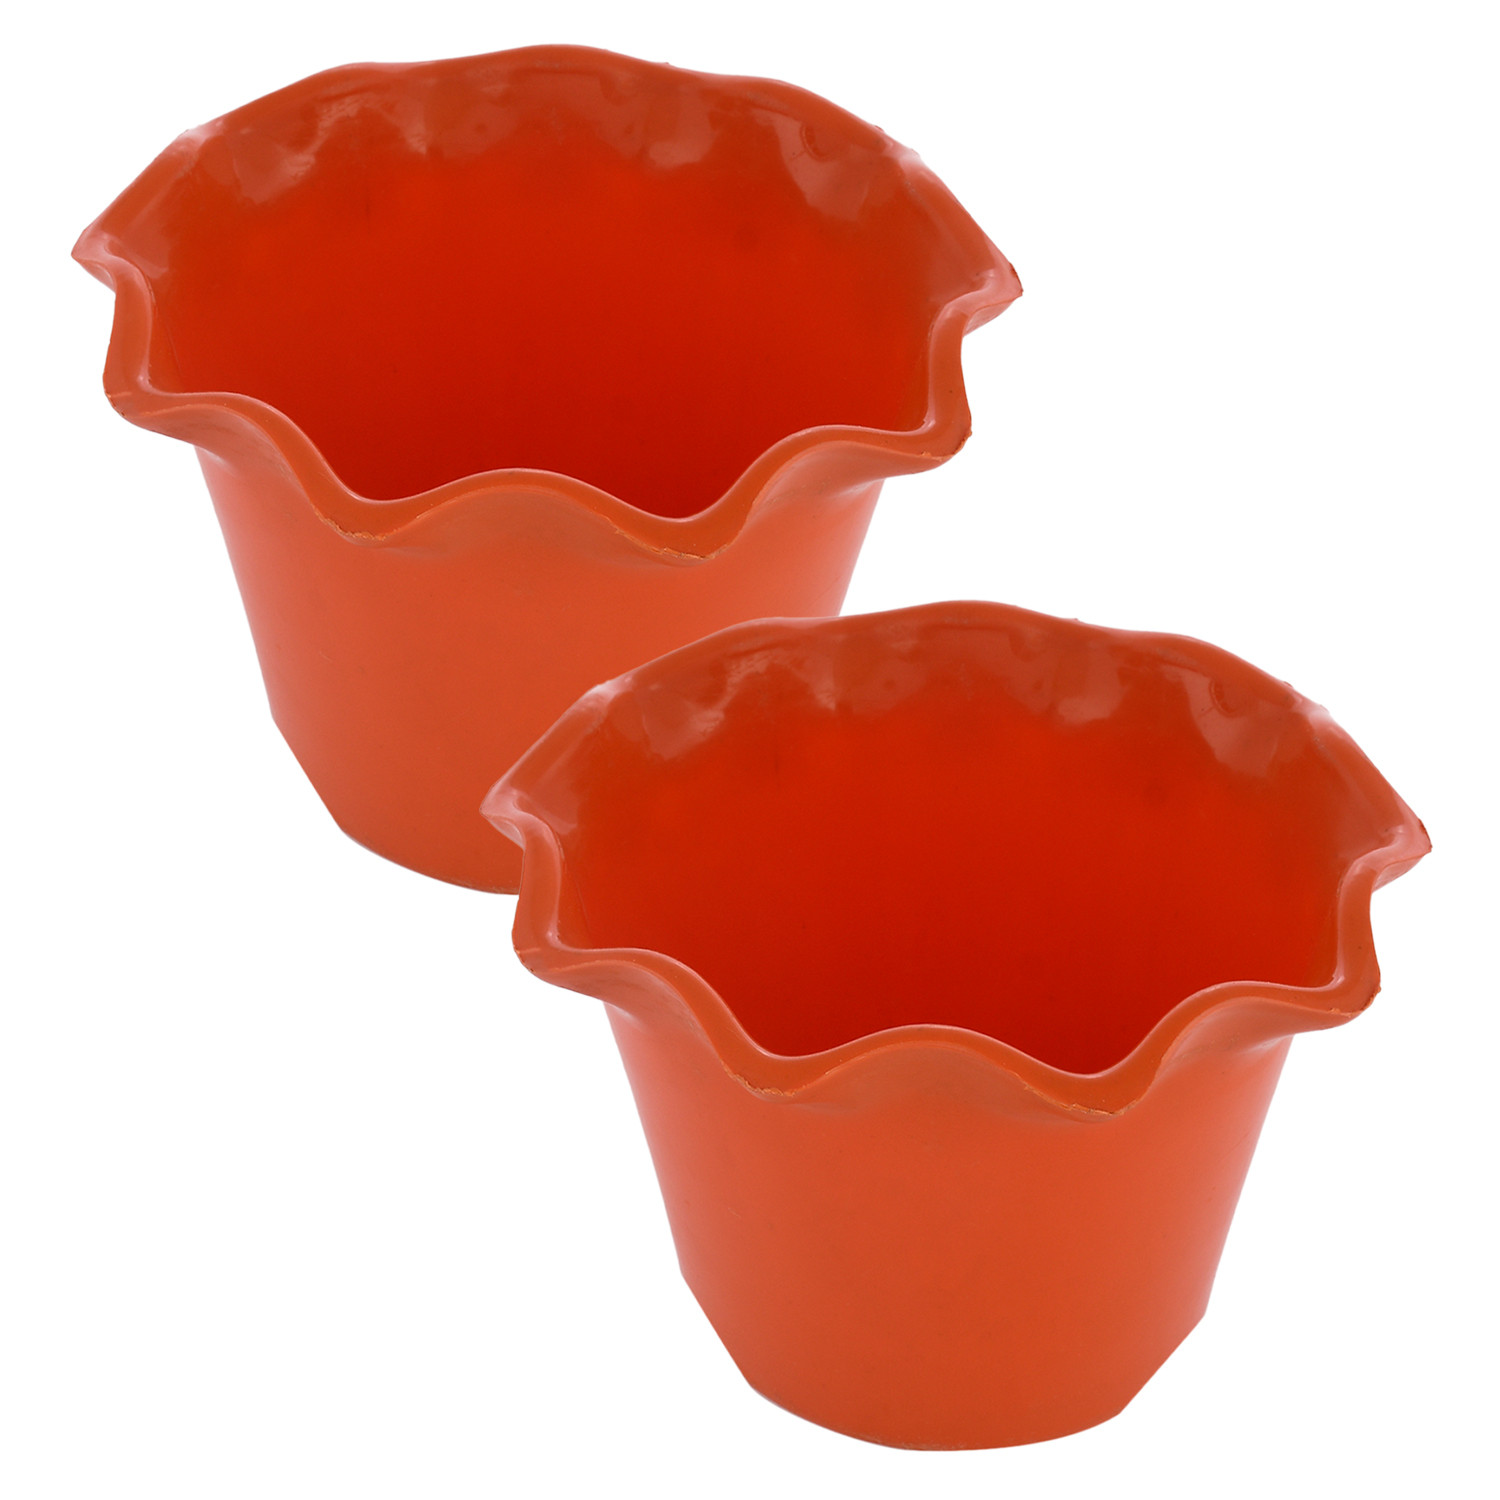 Kuber Industries Blossom Flower Pot|Durable Plastic Flower Pot|Gamla With Drain Holes for Home Décor|Balcony|Garden|8 Inch (Orange)